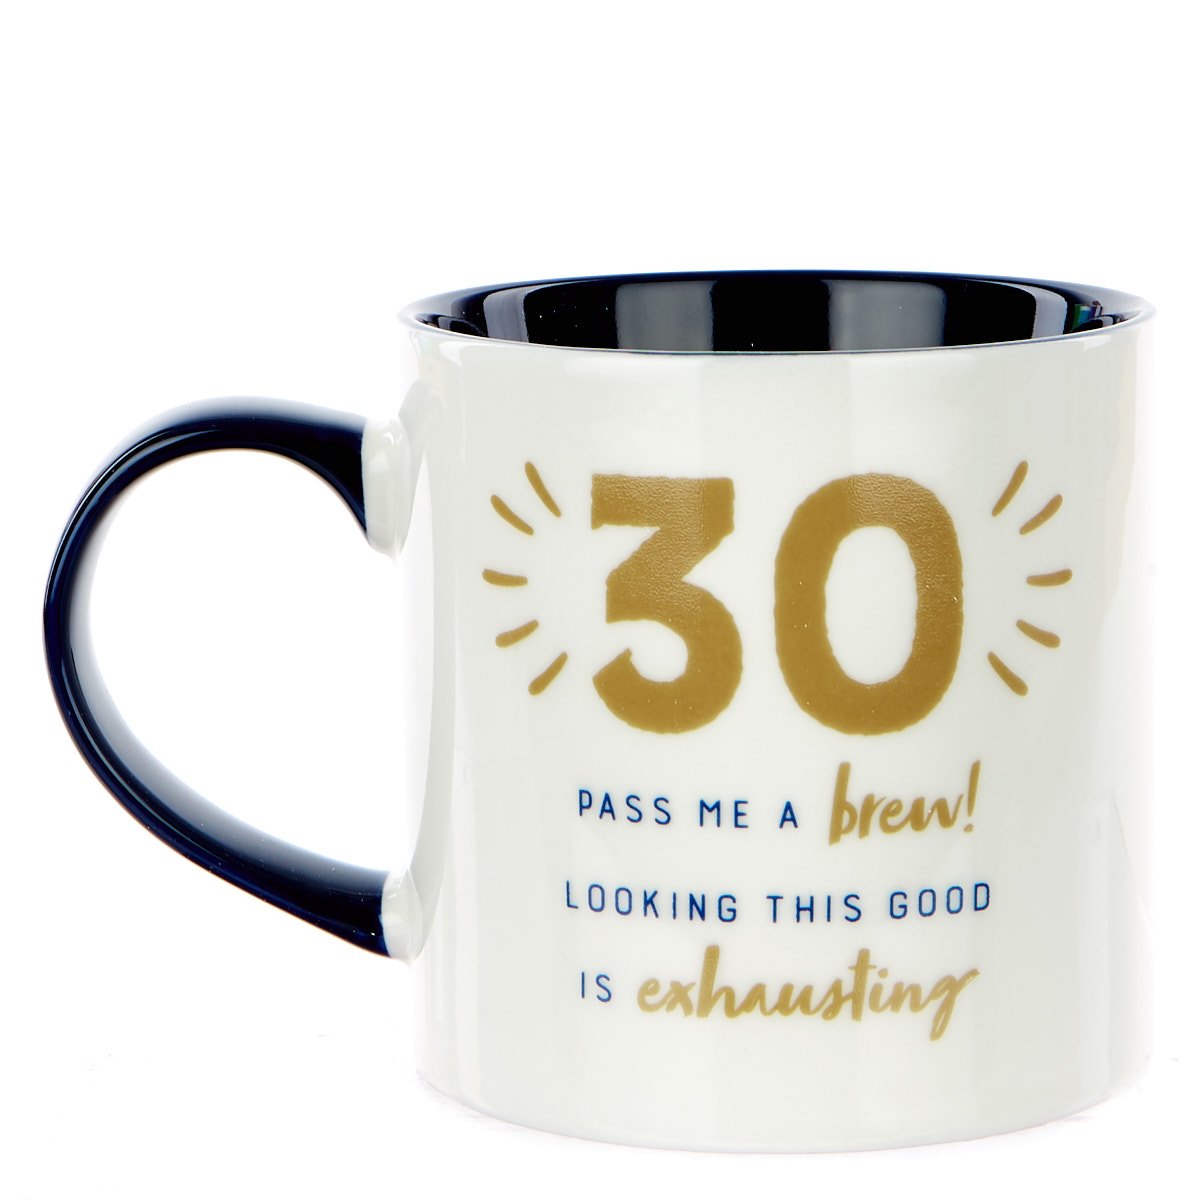 30th Birthday Mug - Looking This Good Is Exhausting